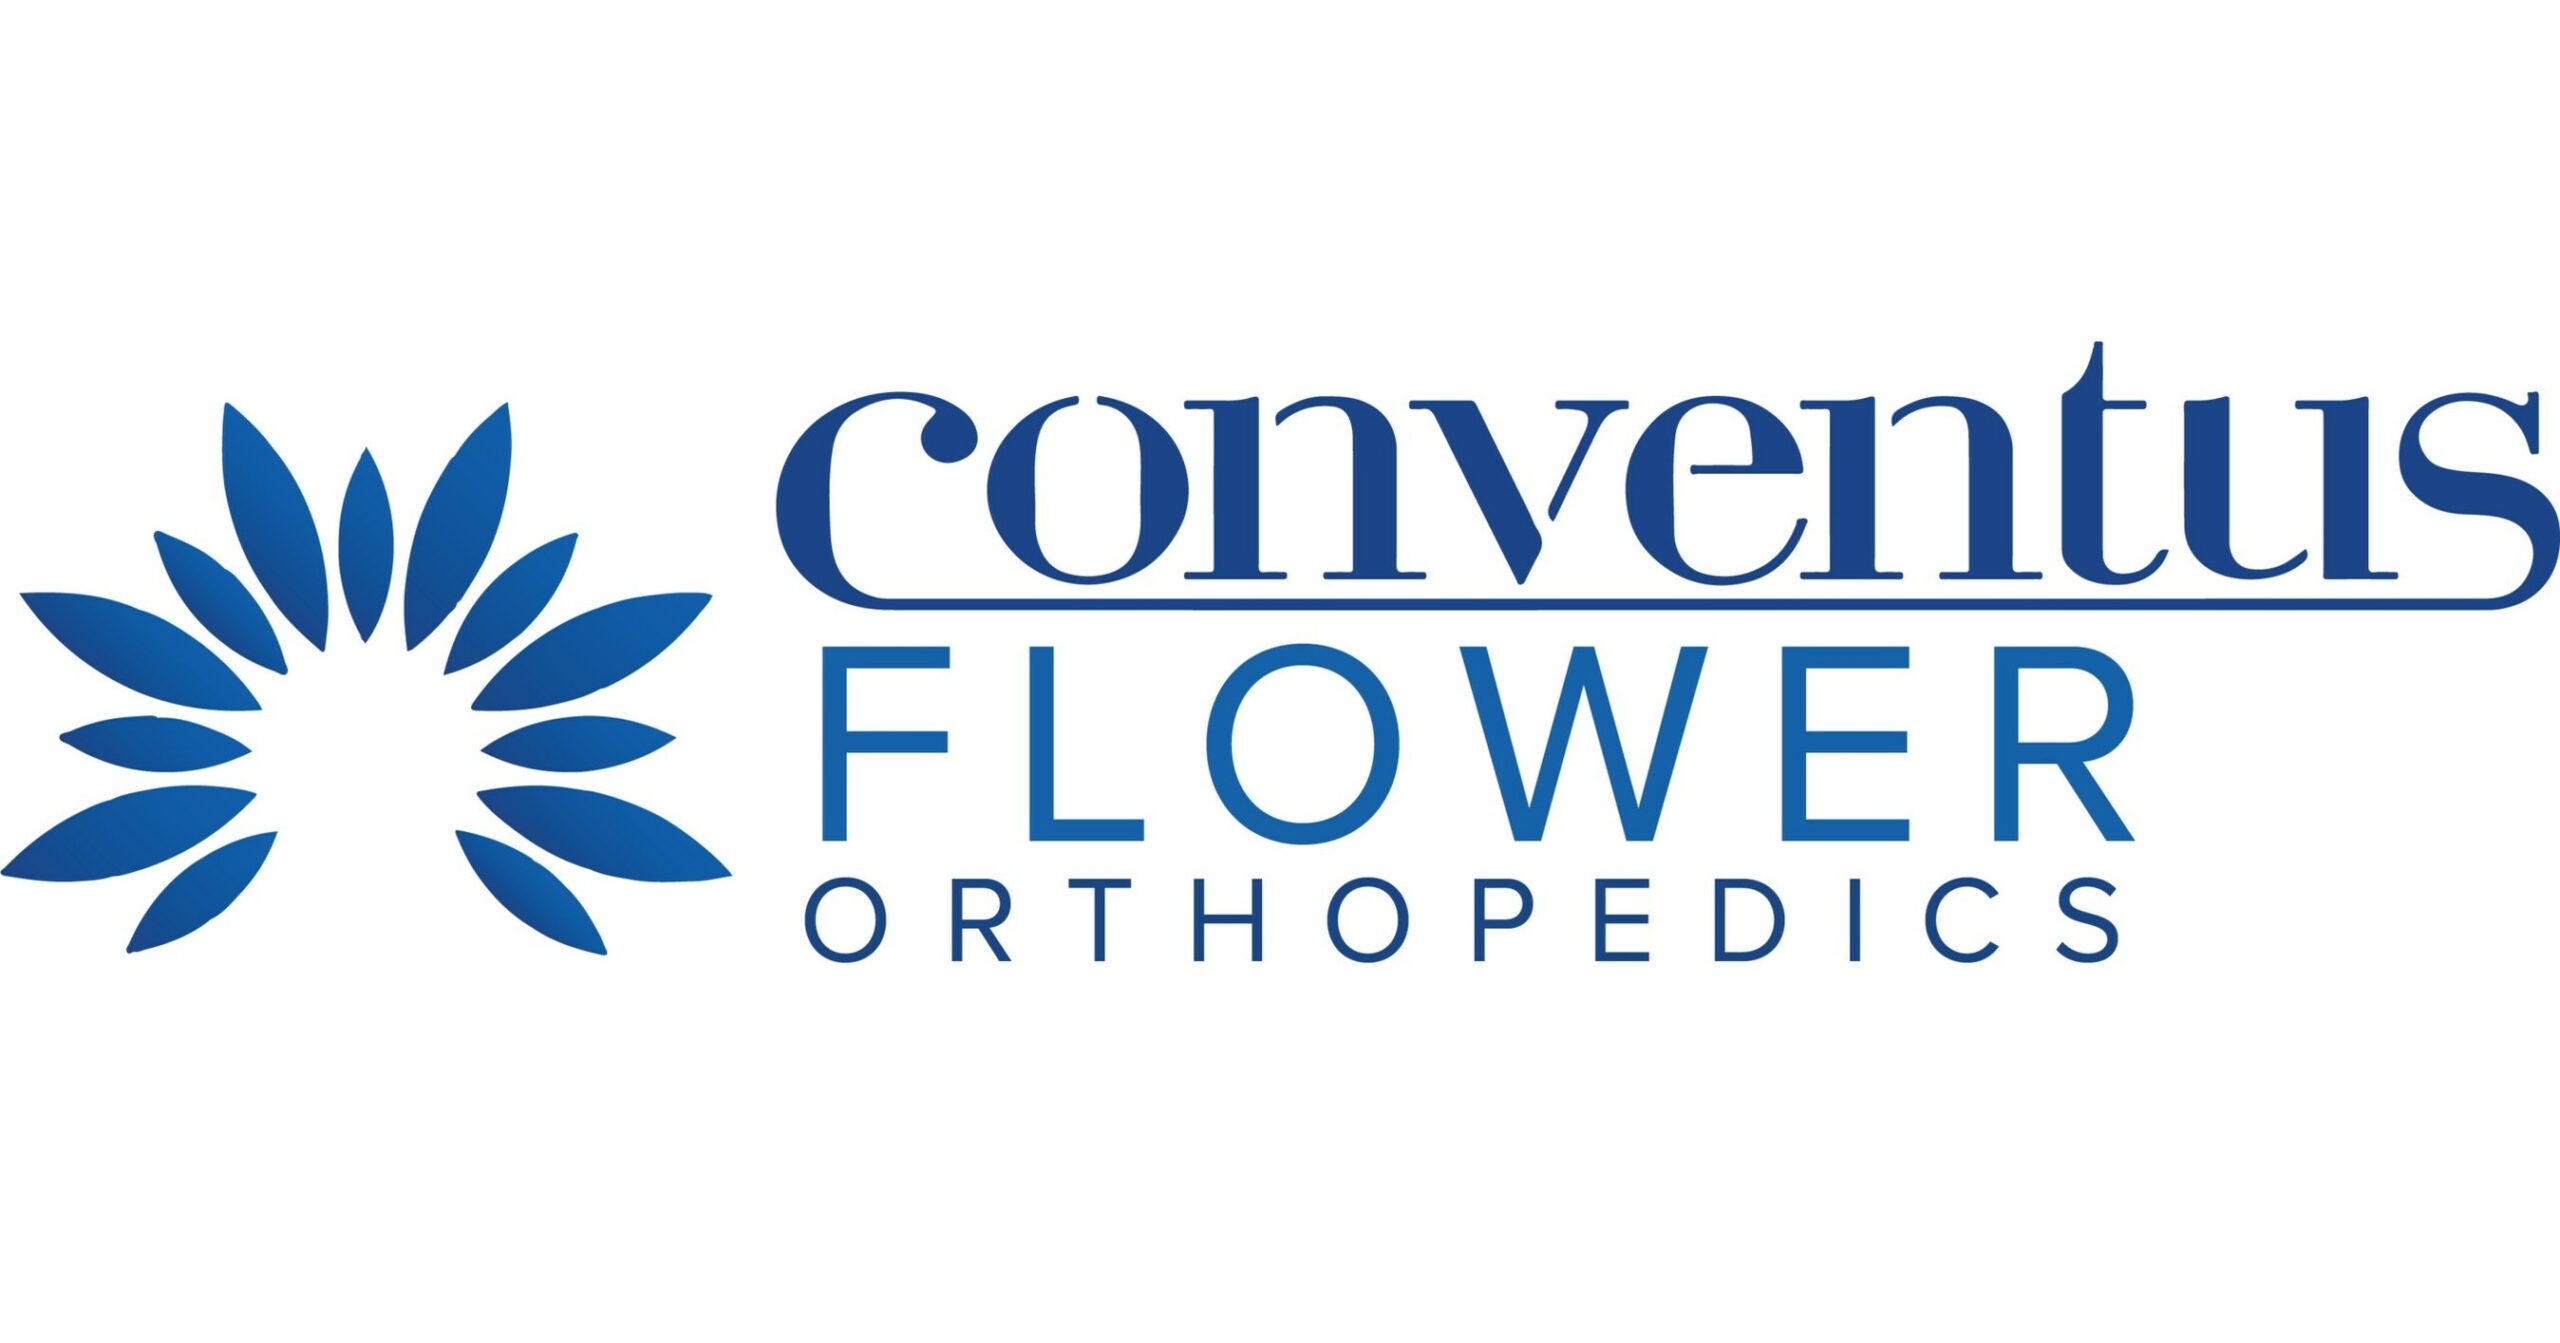 Conventus Flower Orthopedics logo